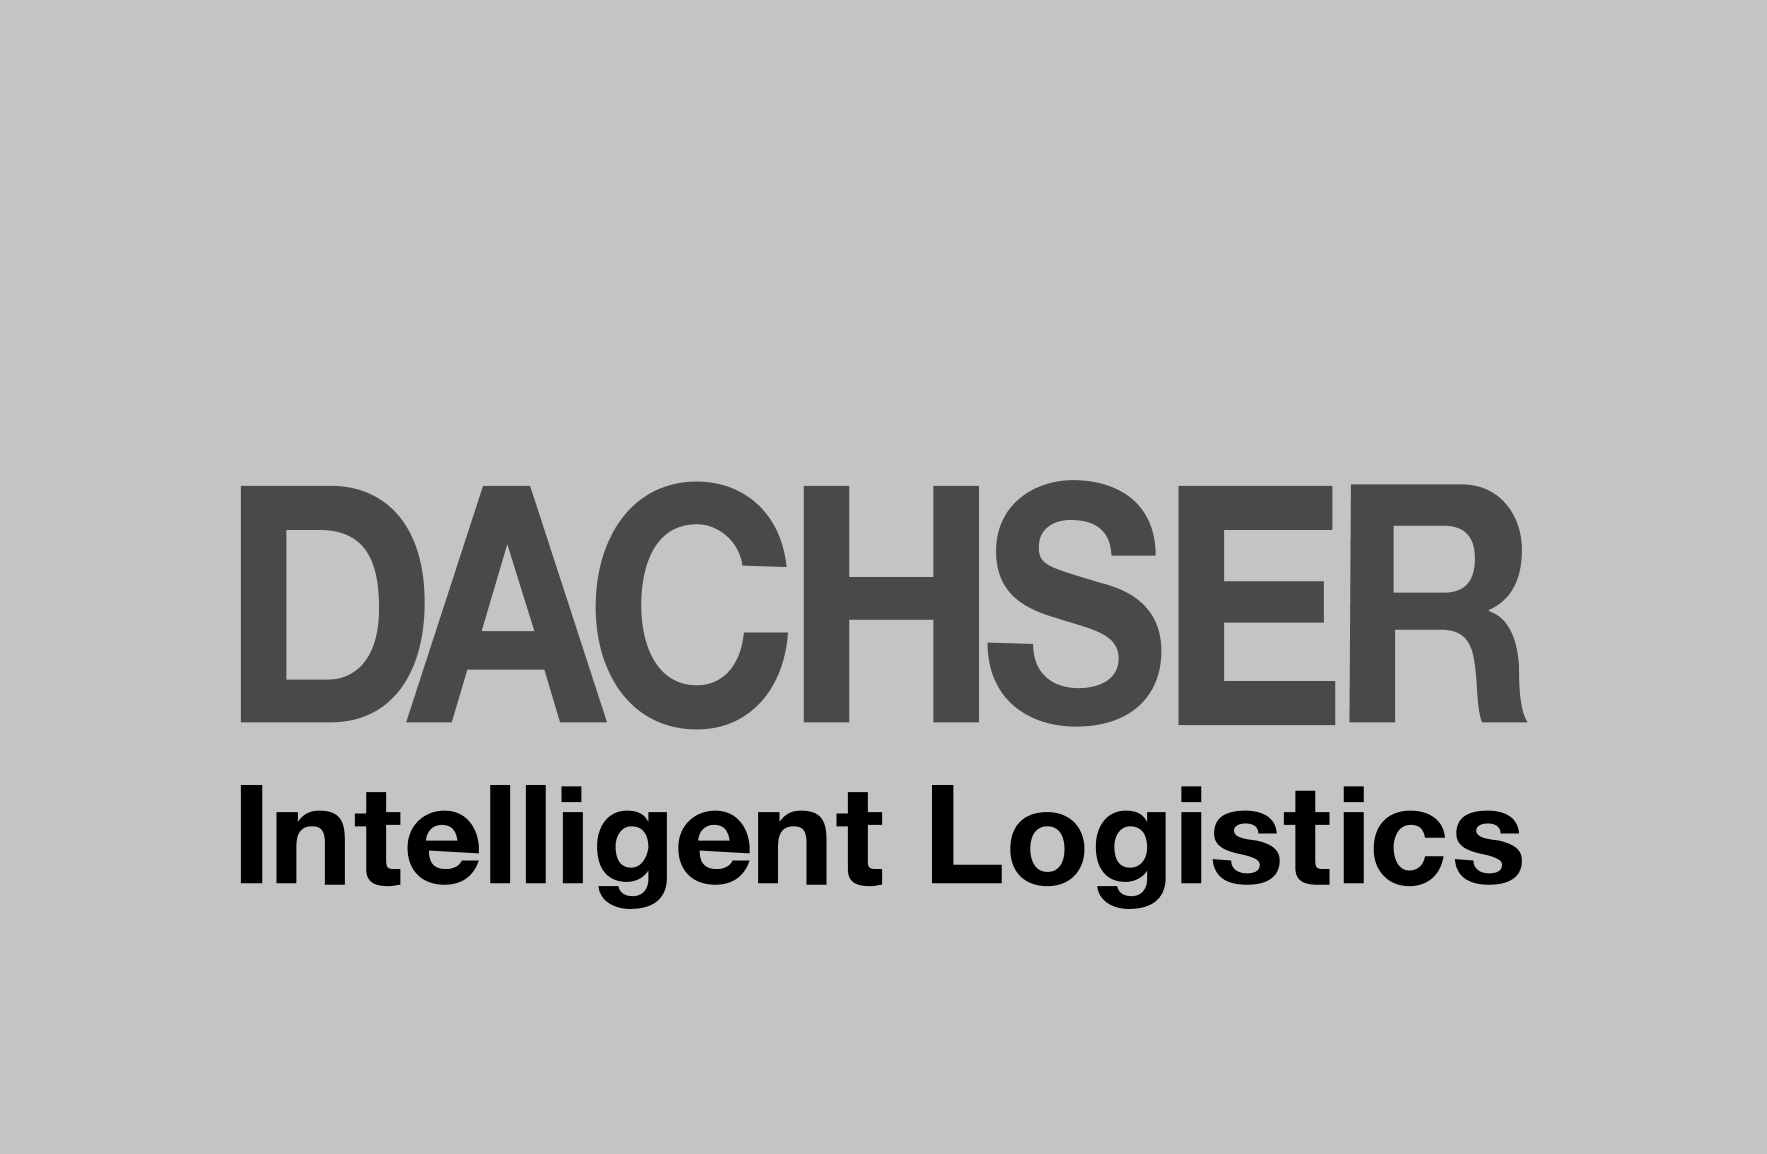 monochromatic Dachser logo